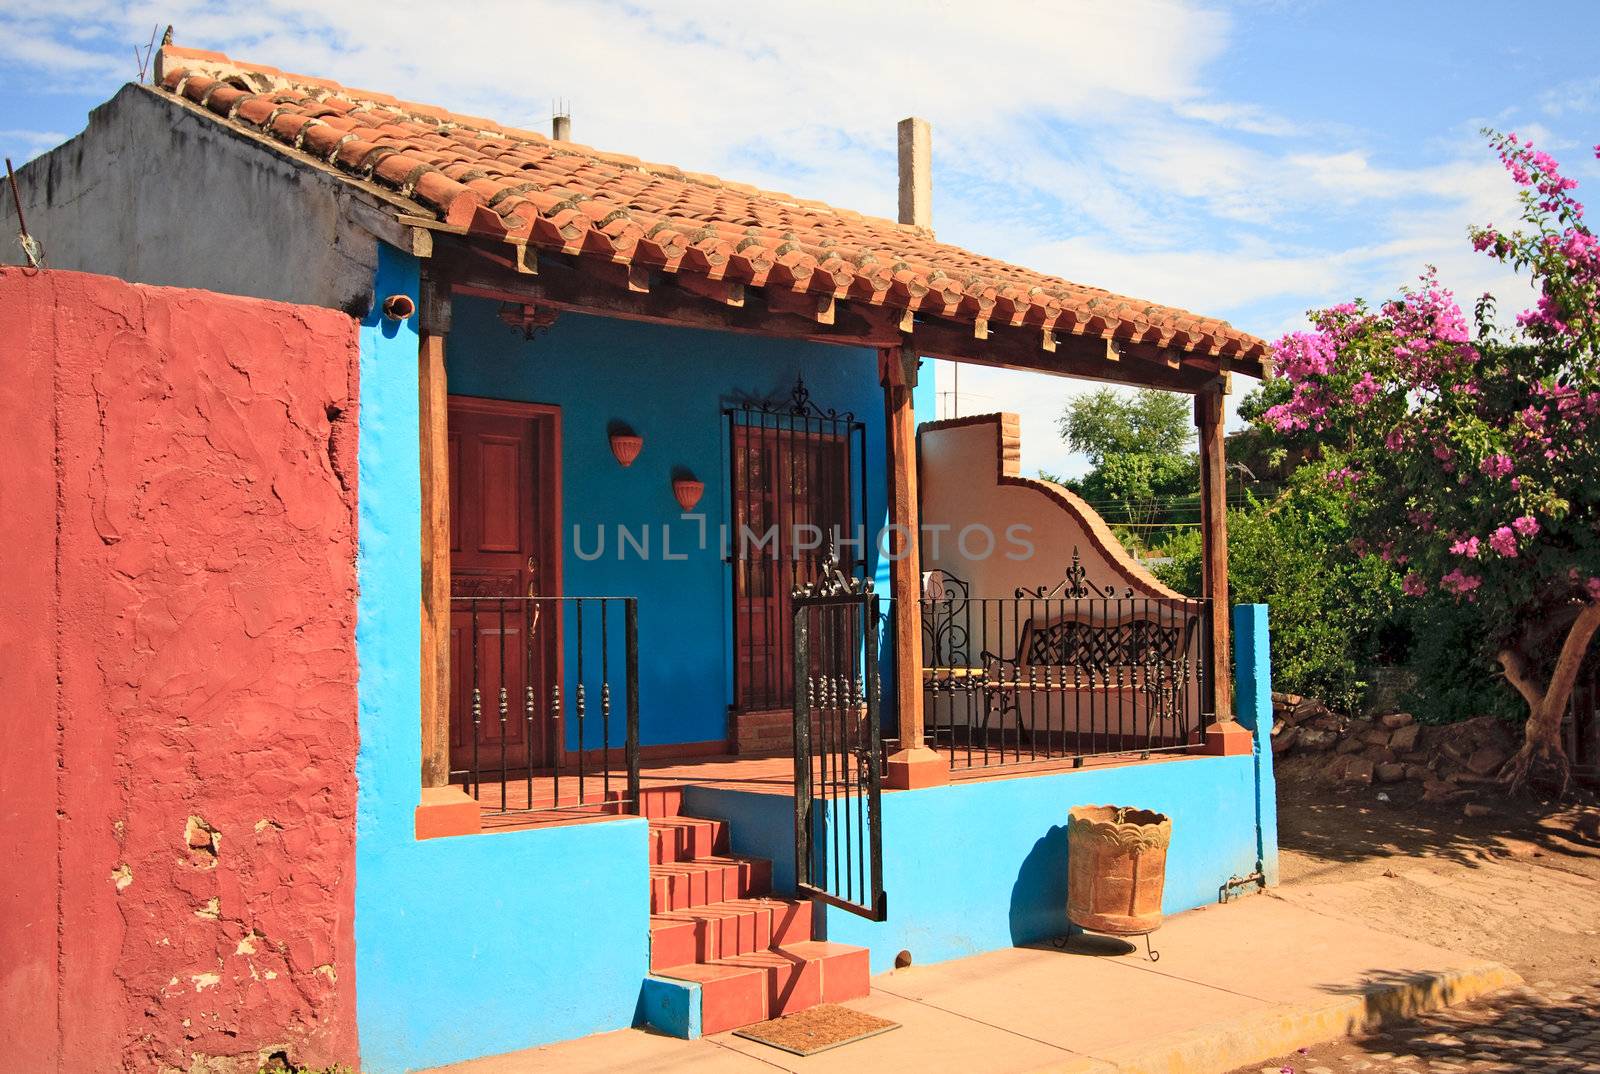 Bright blue house in El Quelite in Mexico